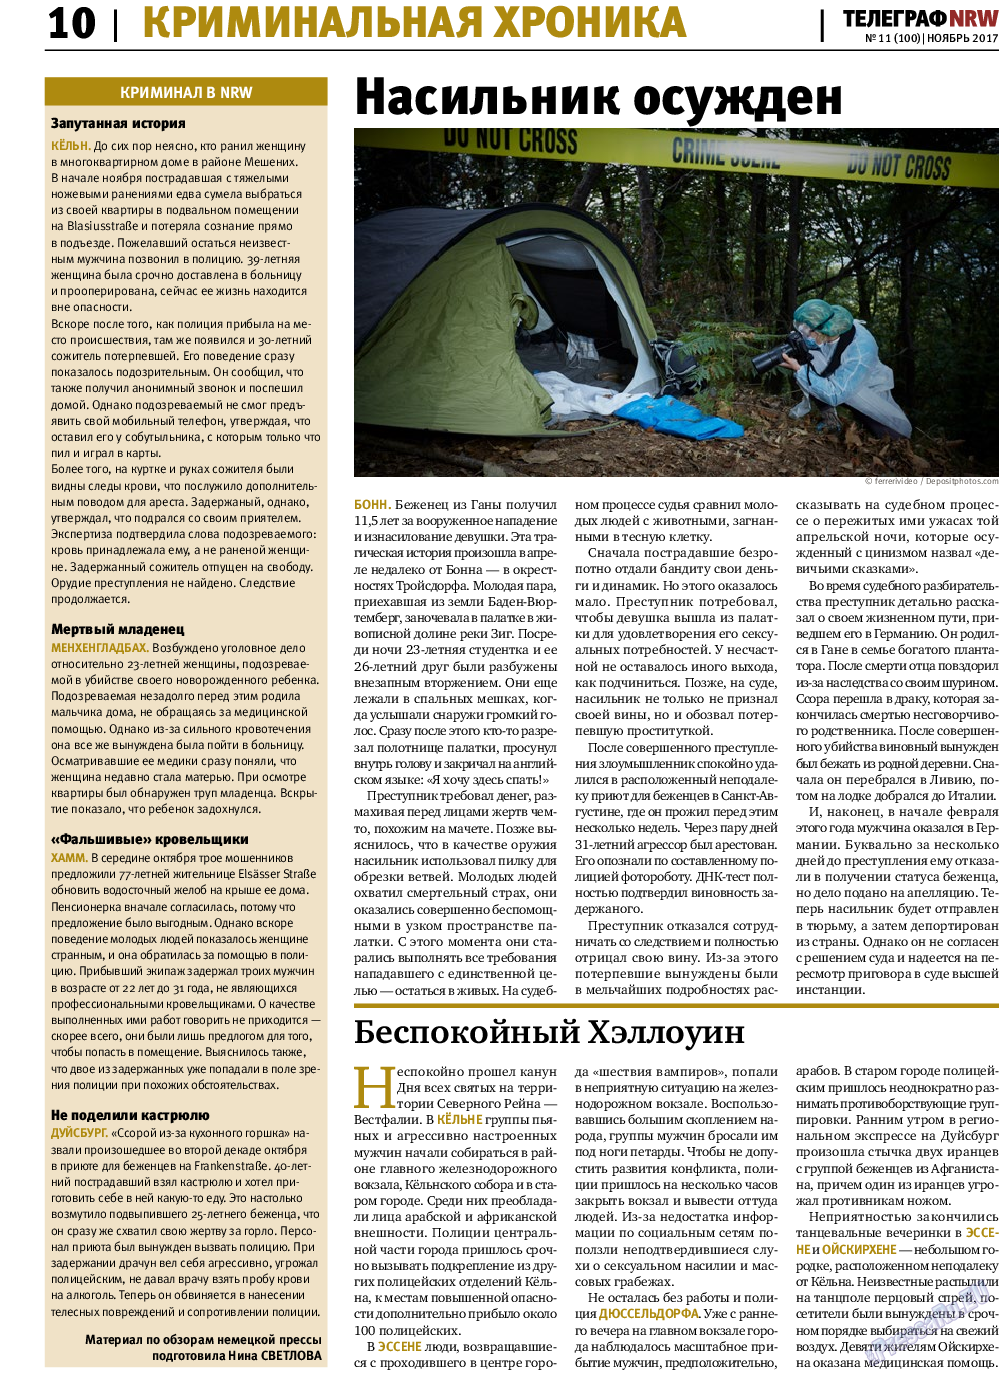 Телеграф NRW, газета. 2017 №11 стр.10